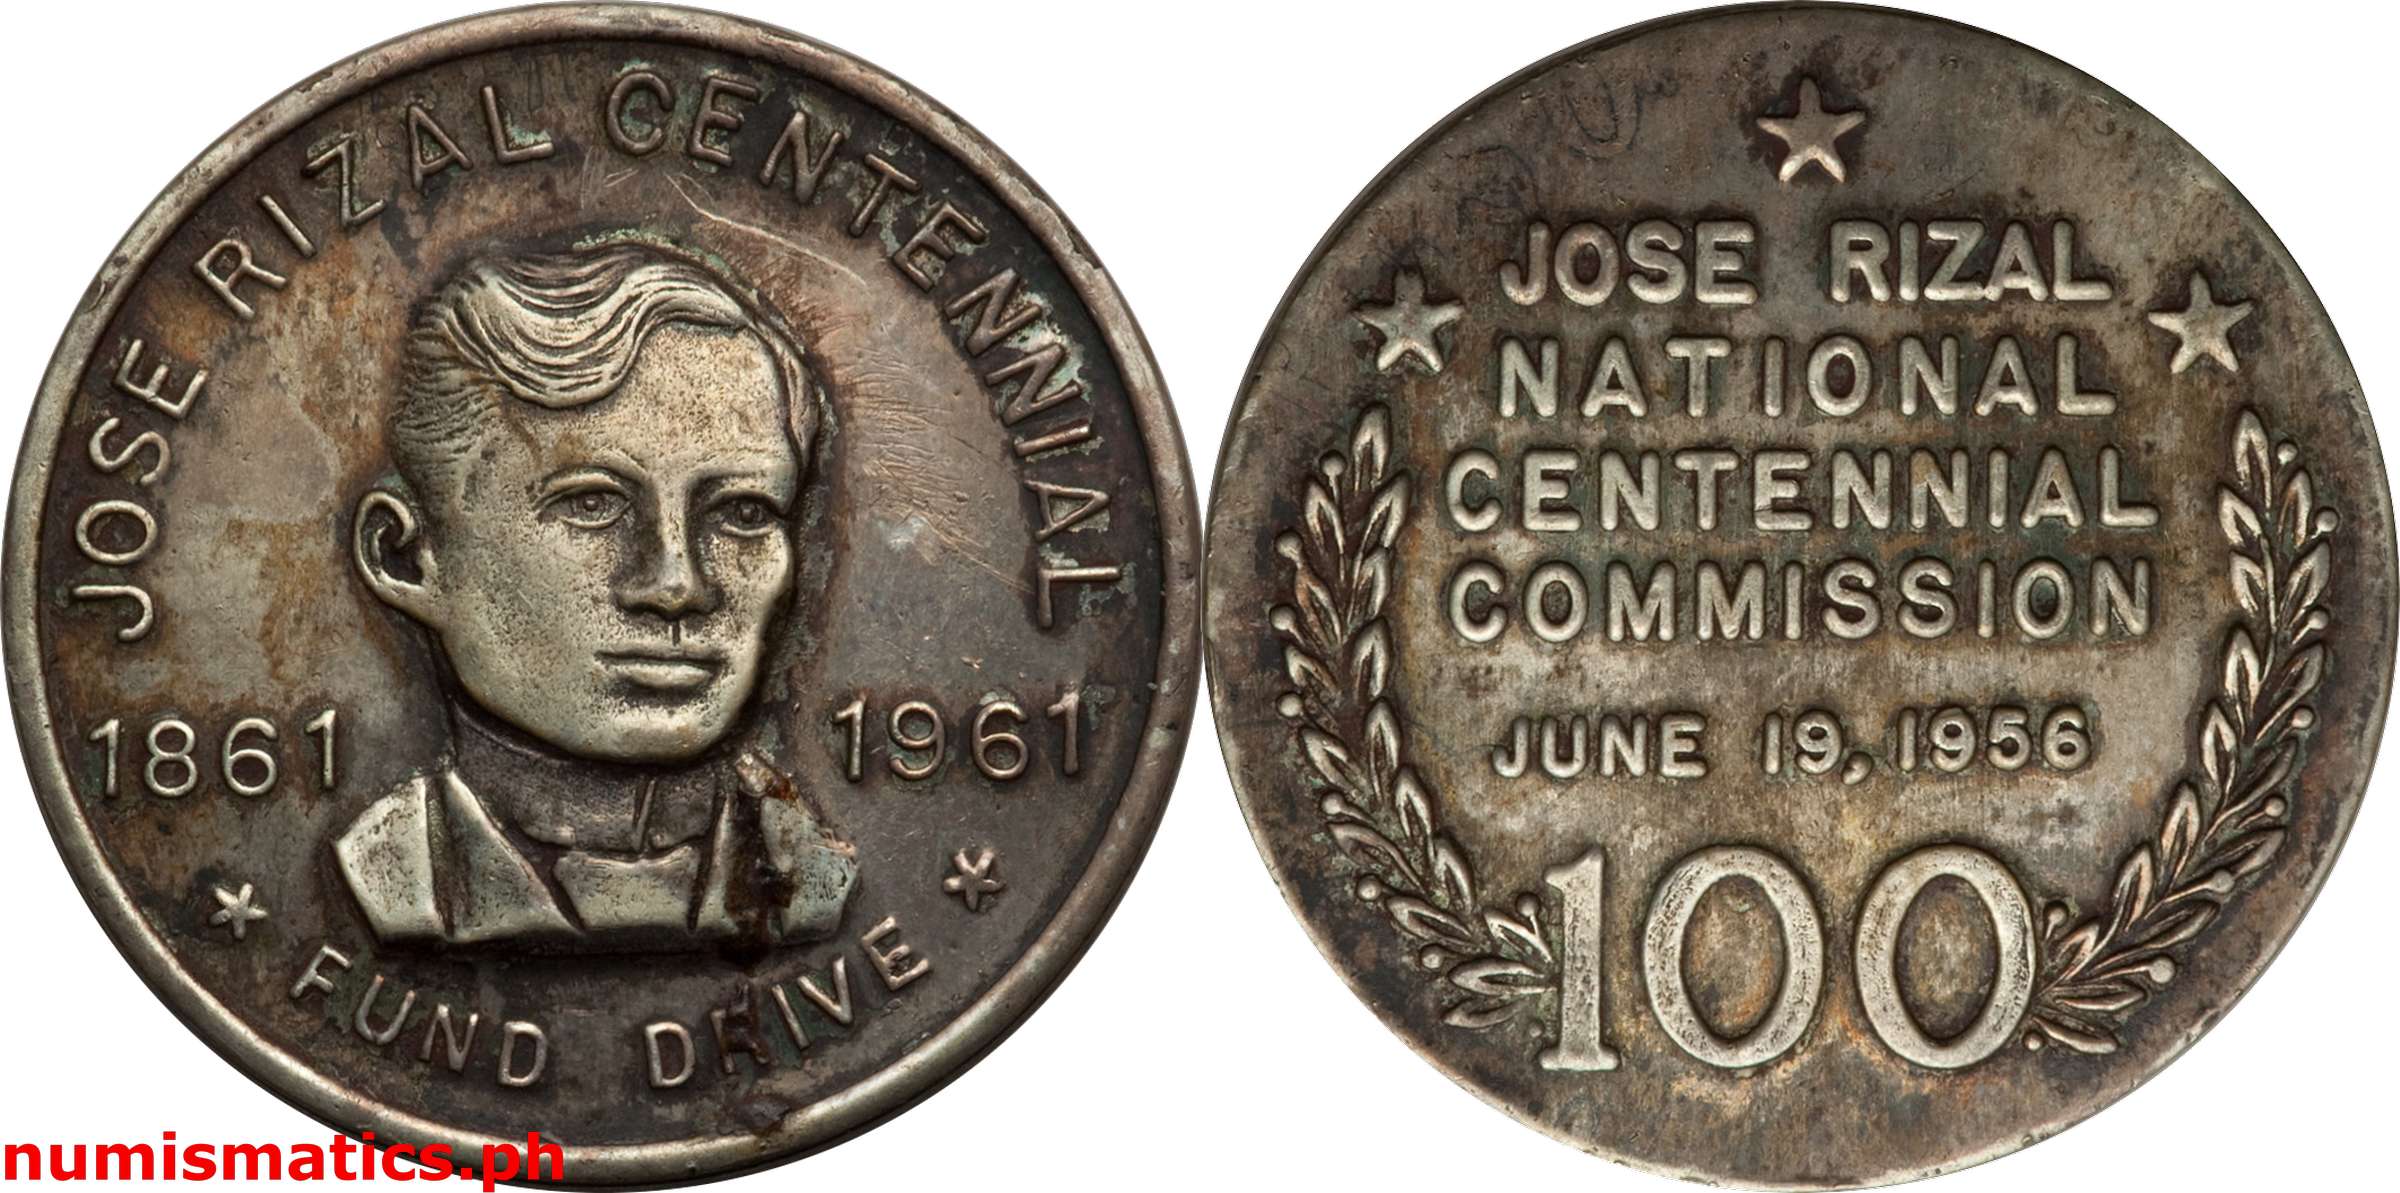 1956 Jose Rizal Centennial Fund Drive Medal Silver